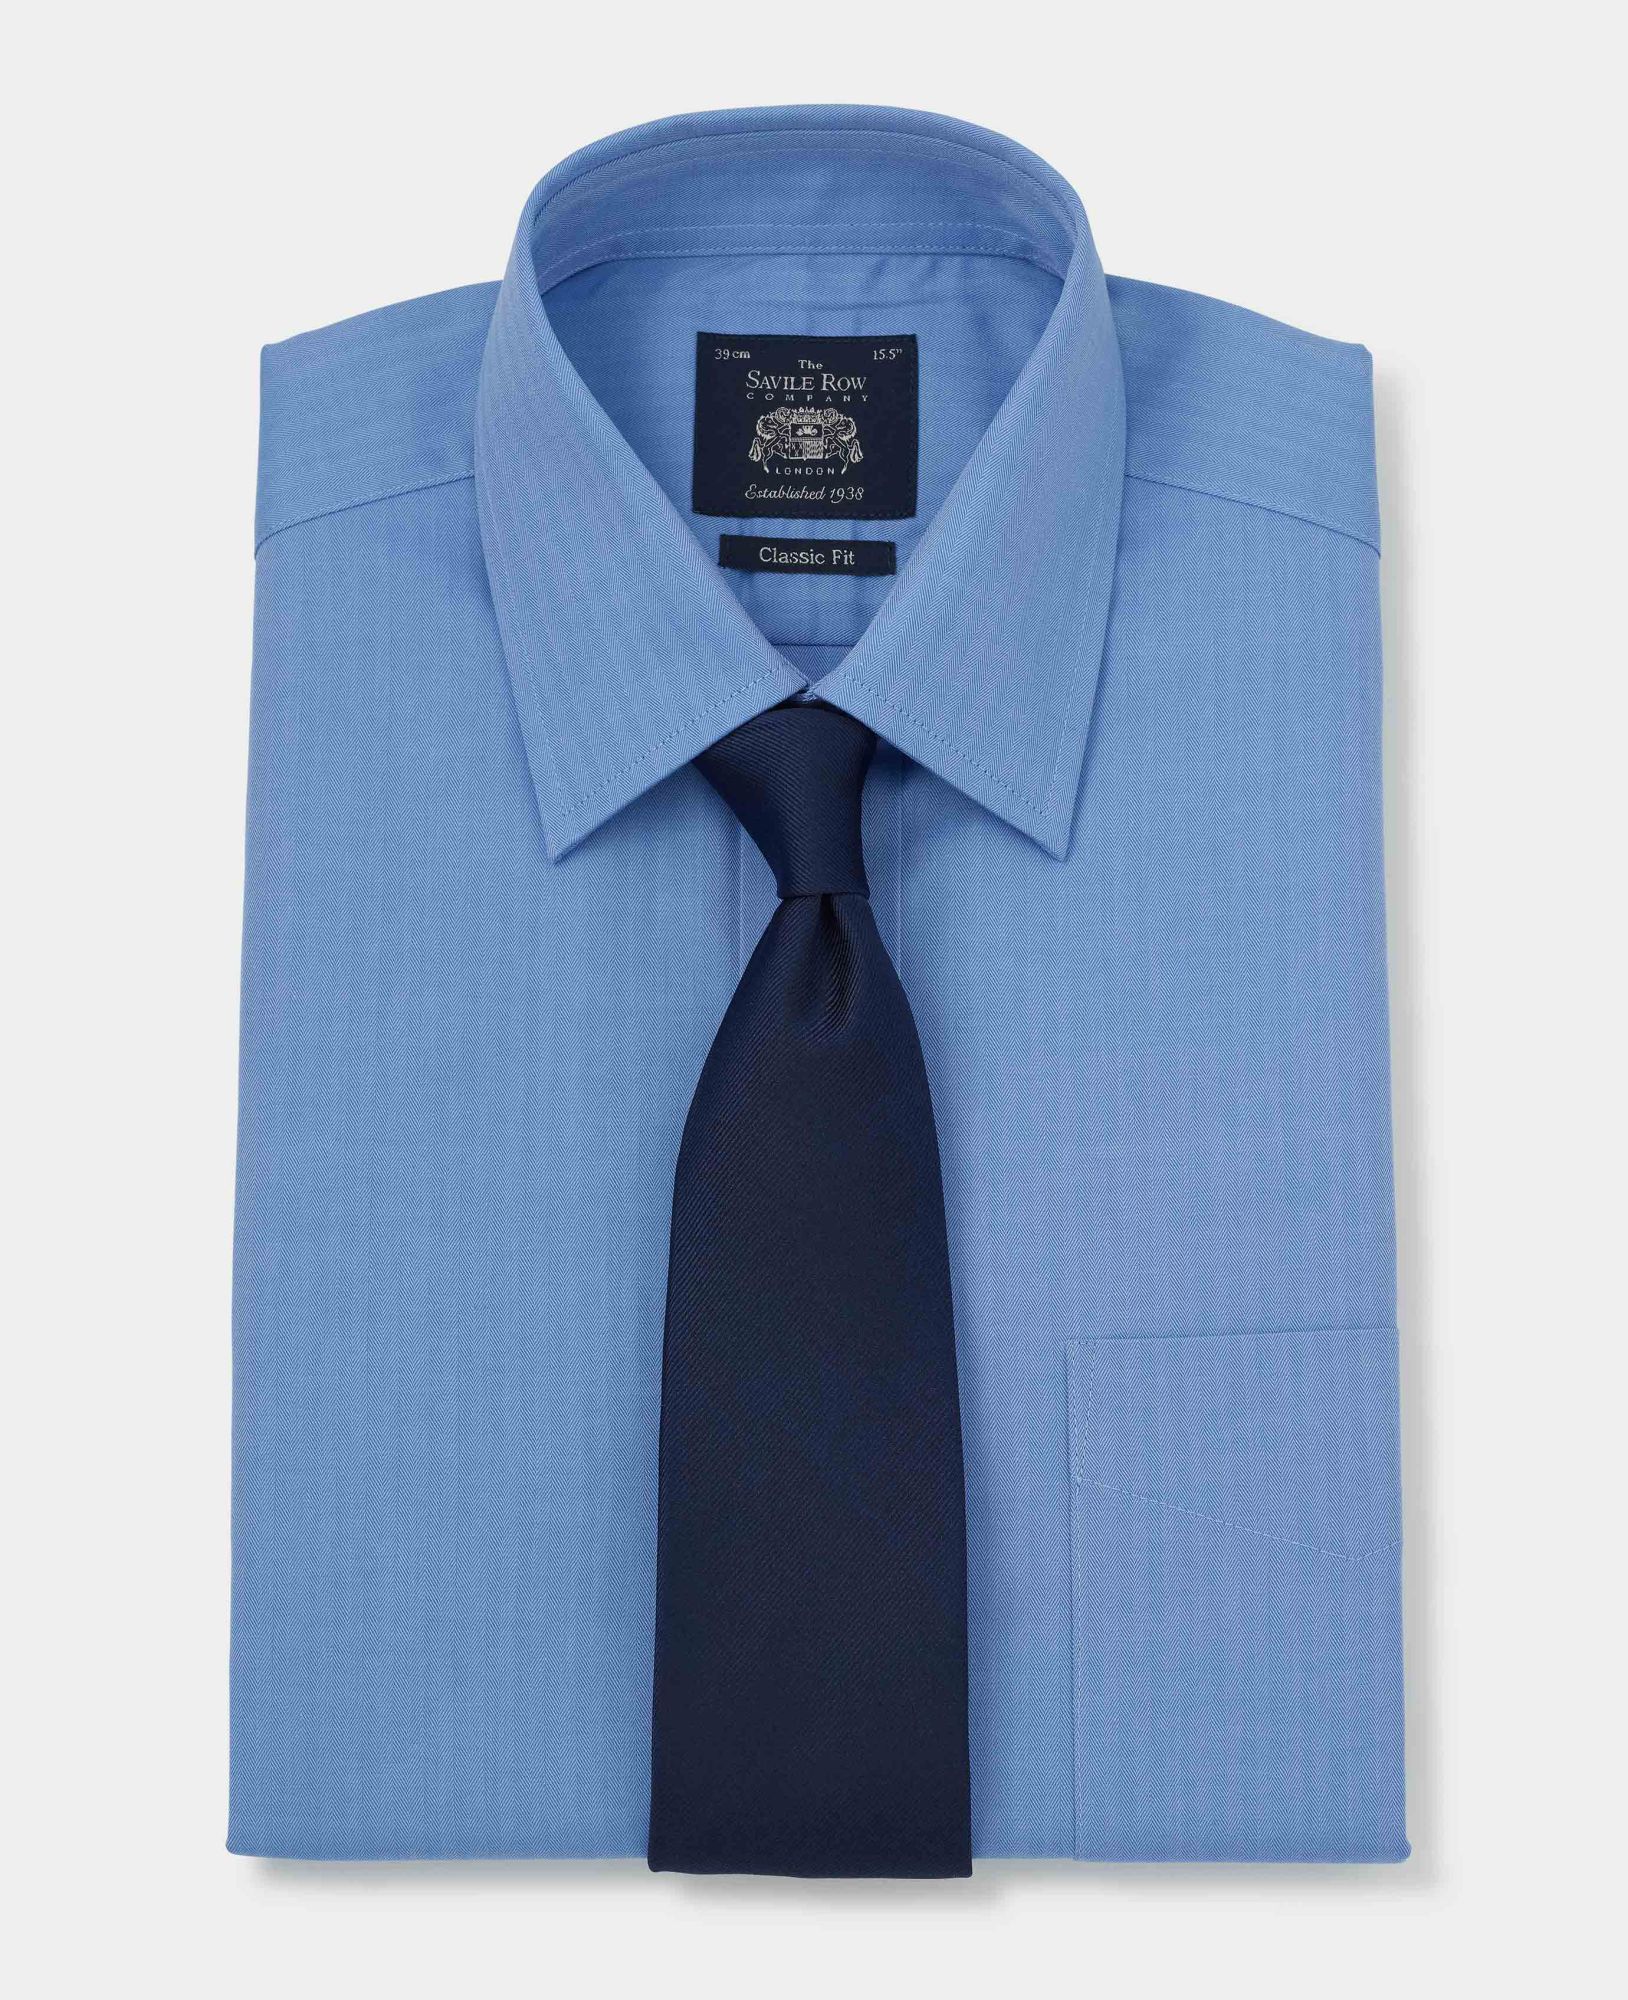 Mid Blue Herringbone Classic Fit Shirt - Double Cuff 20